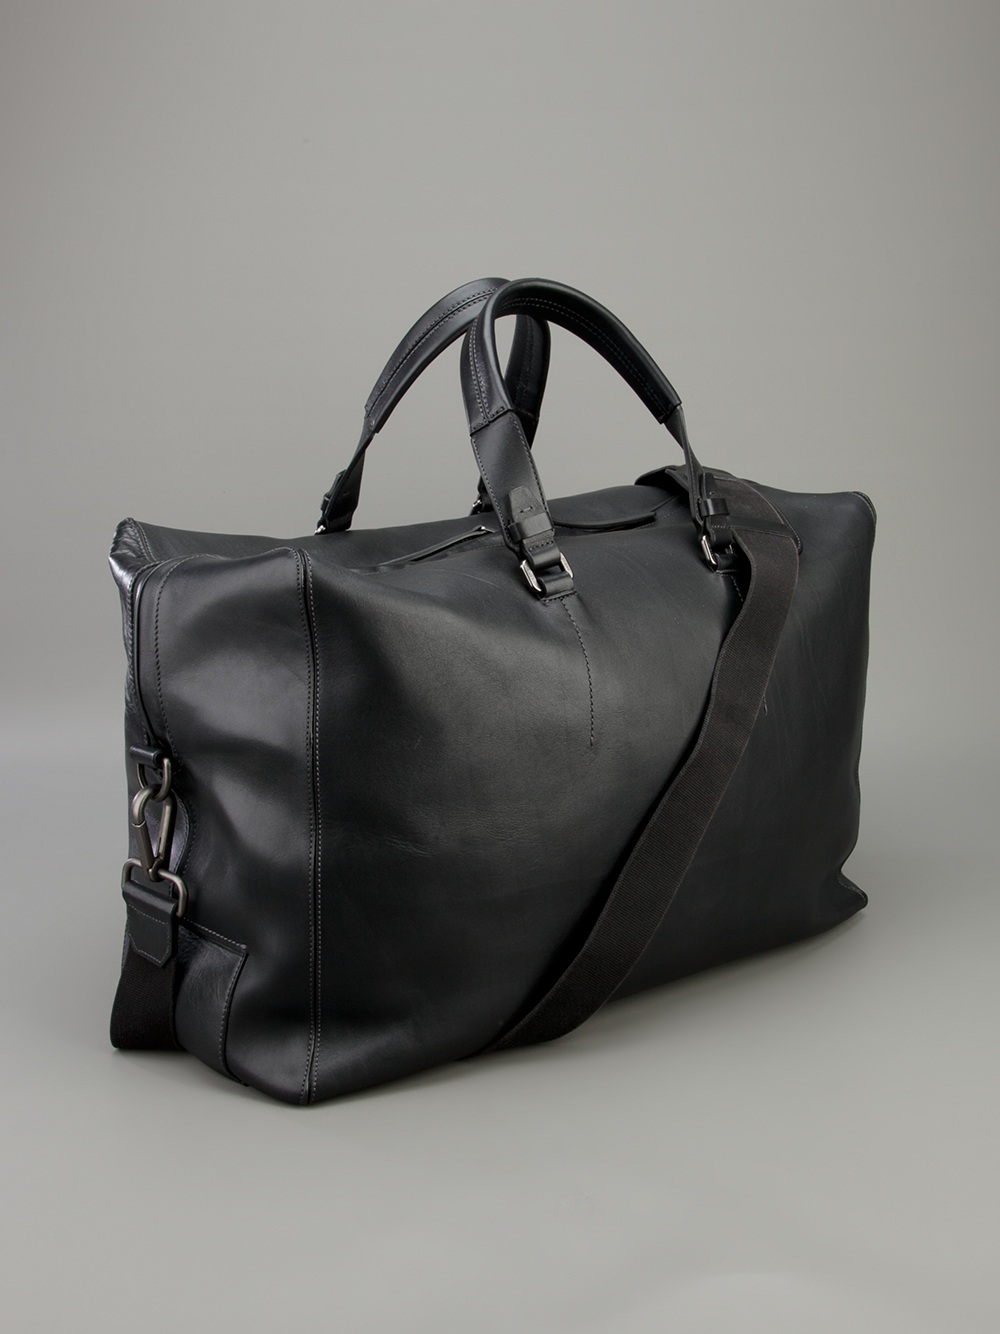 Lanvin Weekend Bag in Black for Men - Lyst